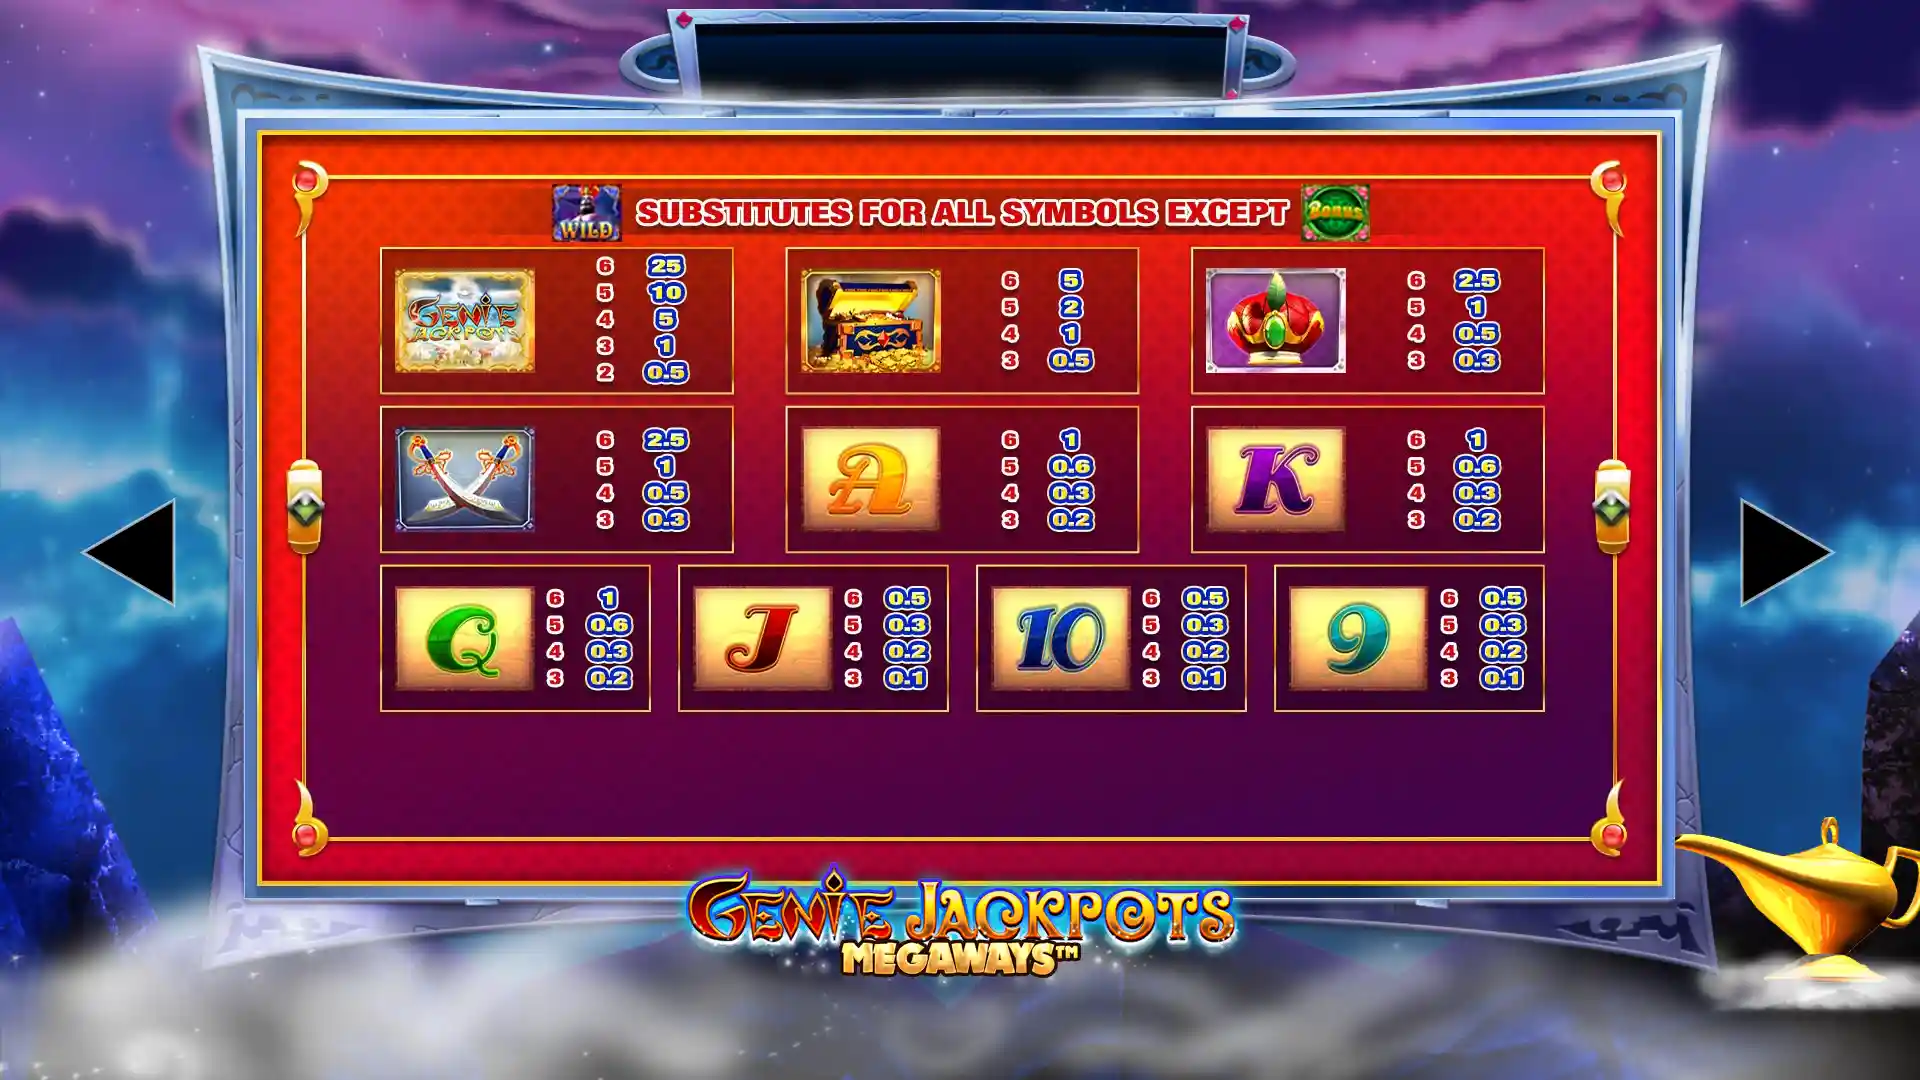 Symbole Online-Spielautomat Genie Jackpots